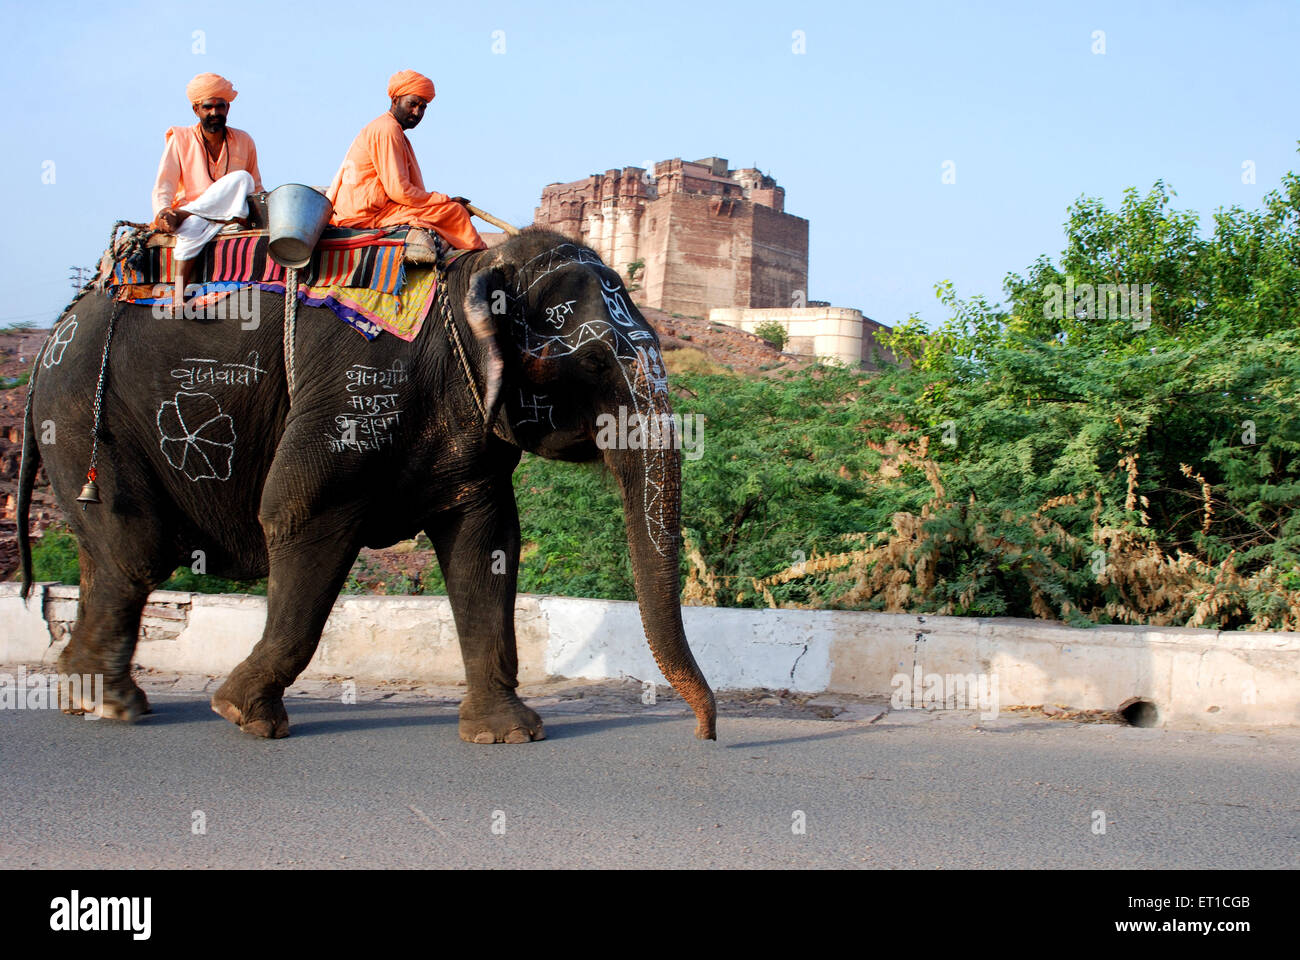 Sadhus sitting on elephant walking on road at Mehrangarh fort ; Jodhpur ; Rajasthan ; India Stock Photo